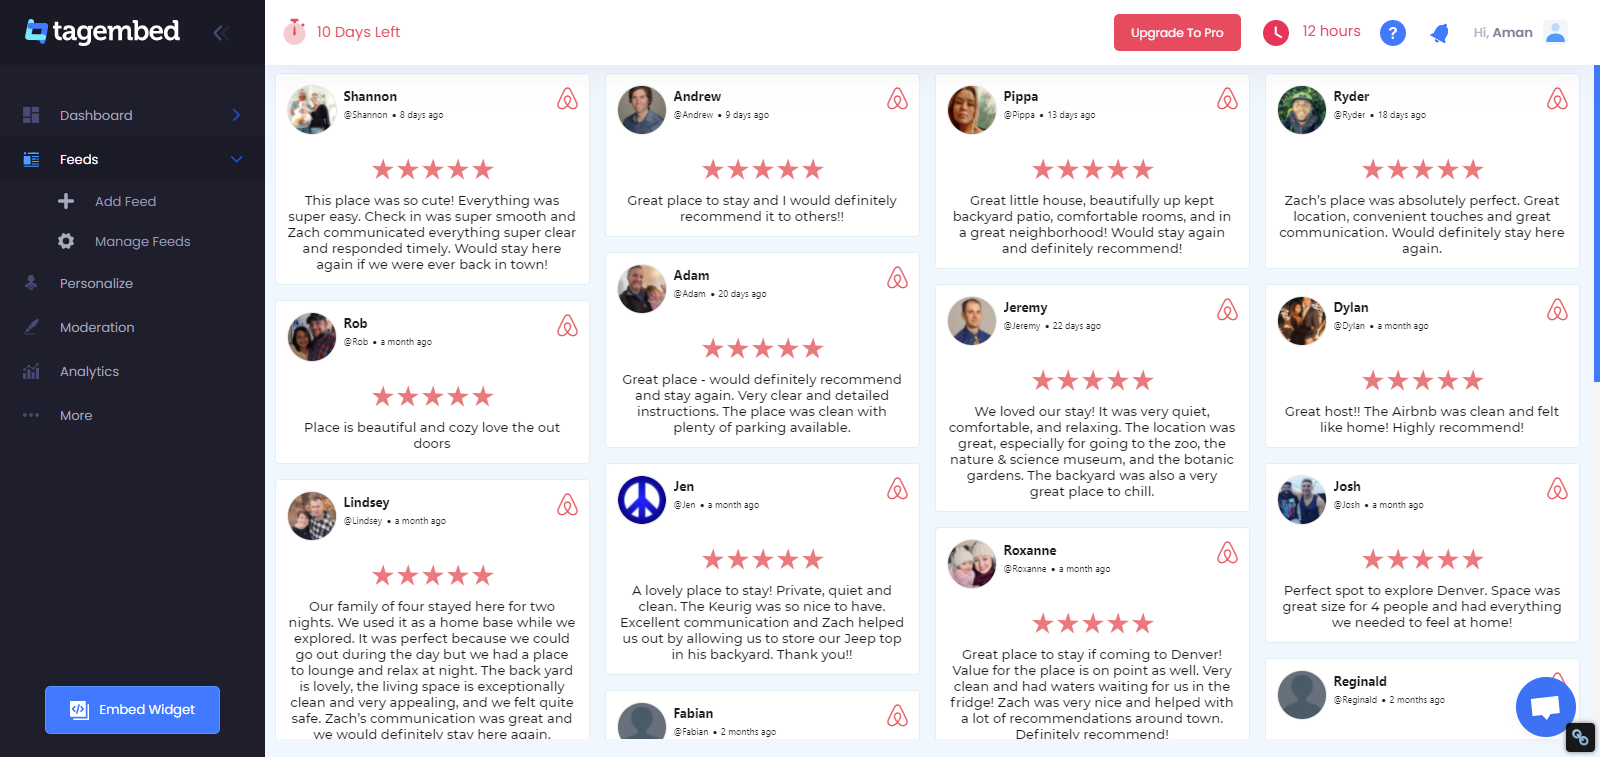 airbnb reviews